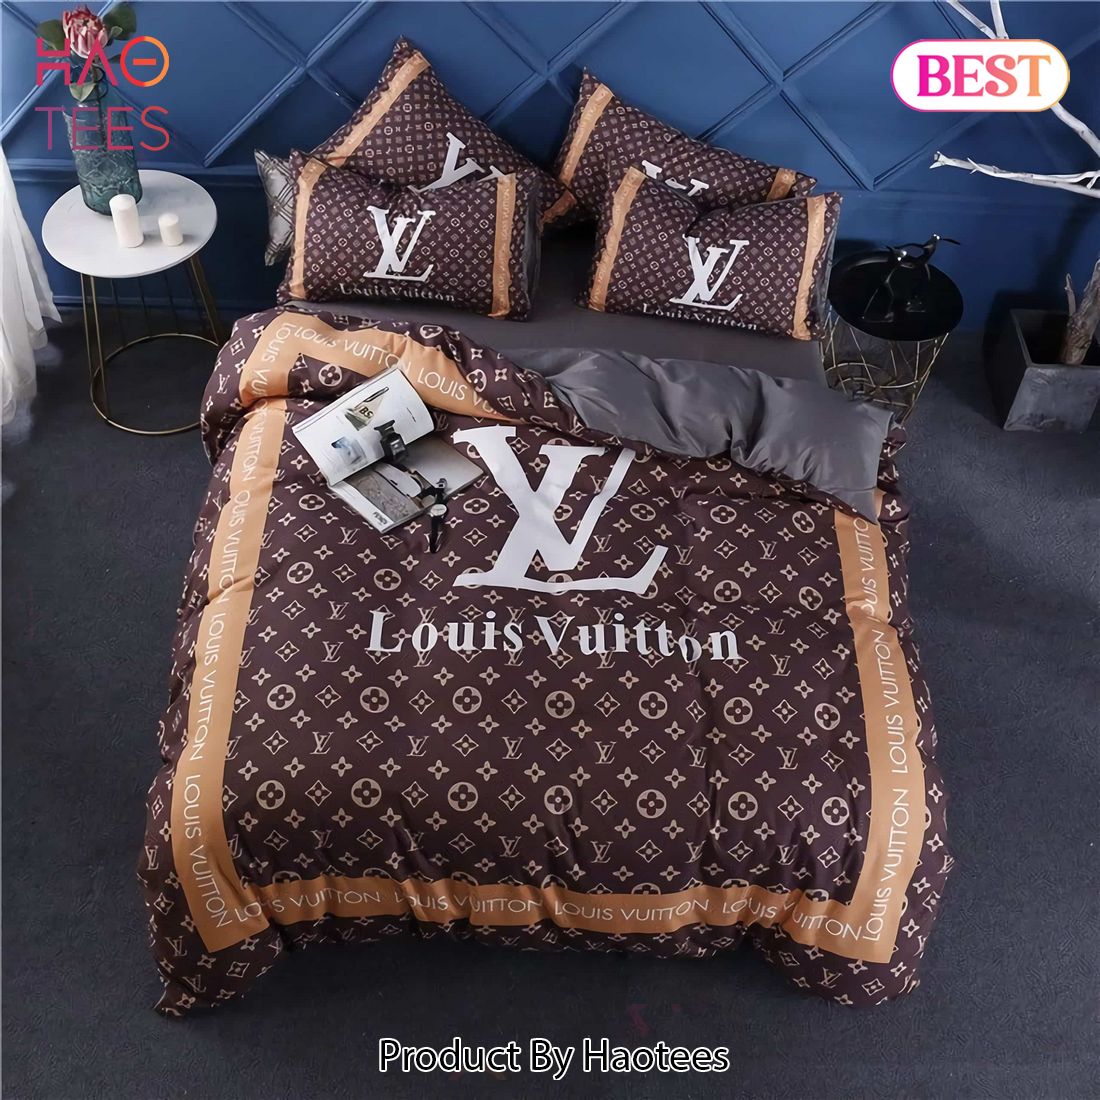 Louis Vuitton Luxury Brands 25 Bedroom Duvet Cover Louis Vuitton Bedding Set  - Binteez